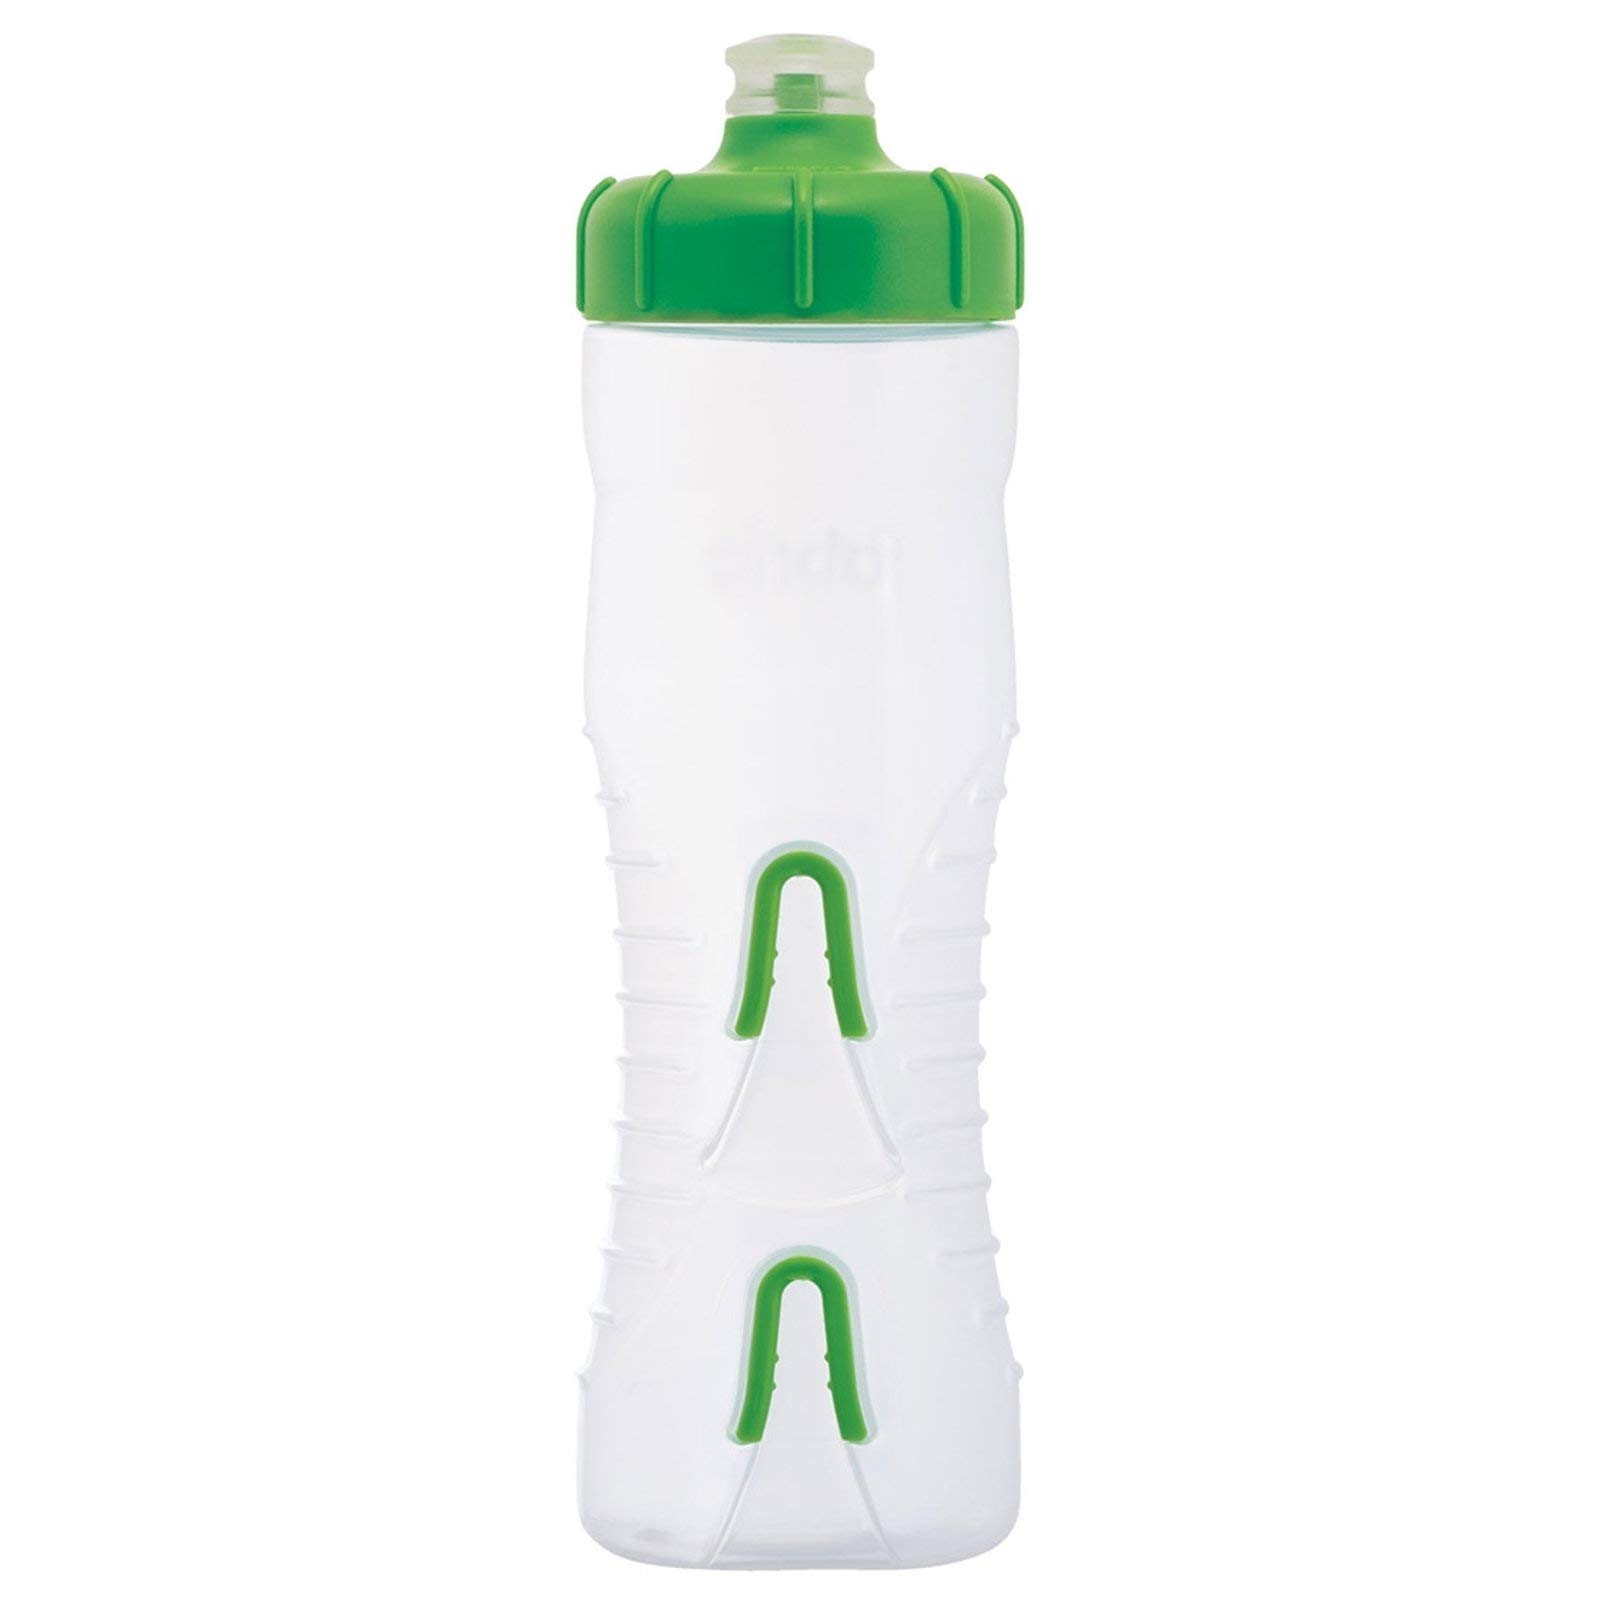 Fabric Cageless Water Bottle, 750ml, Green